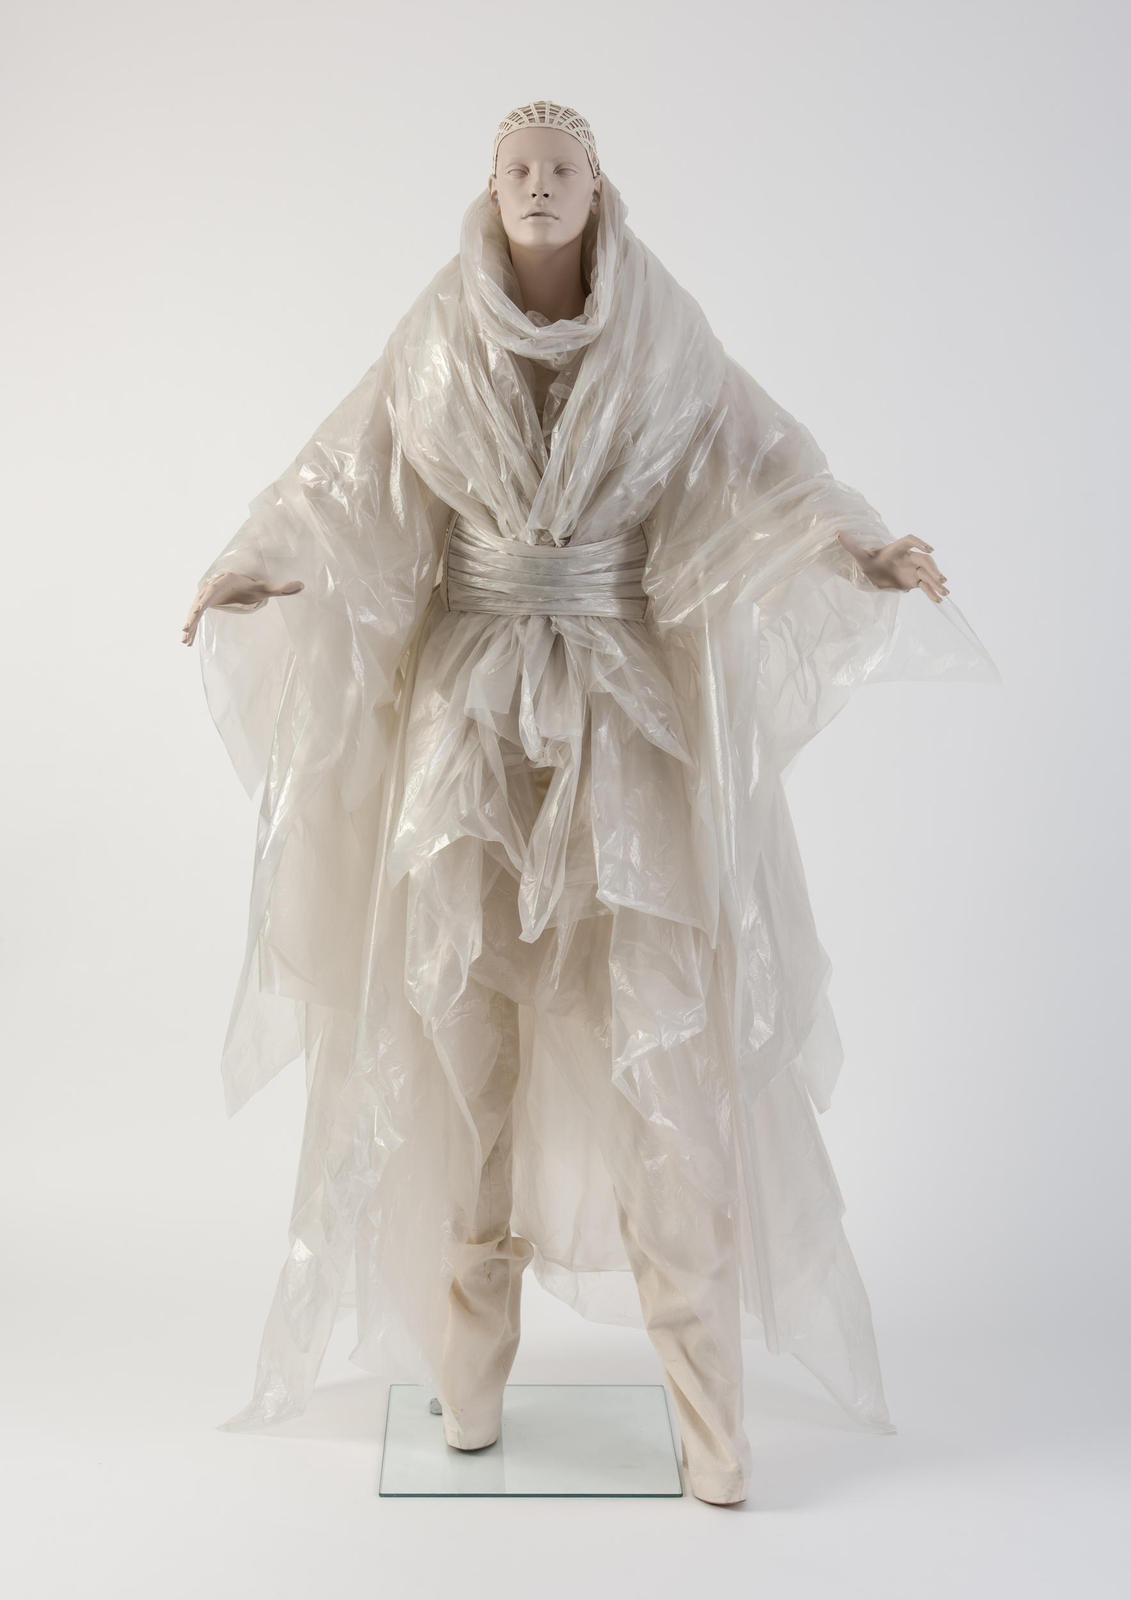 Iridescent layered plastic ensemble, Gareth Pugh. Chosen as Dress of the Year 2014 by Katie Grand